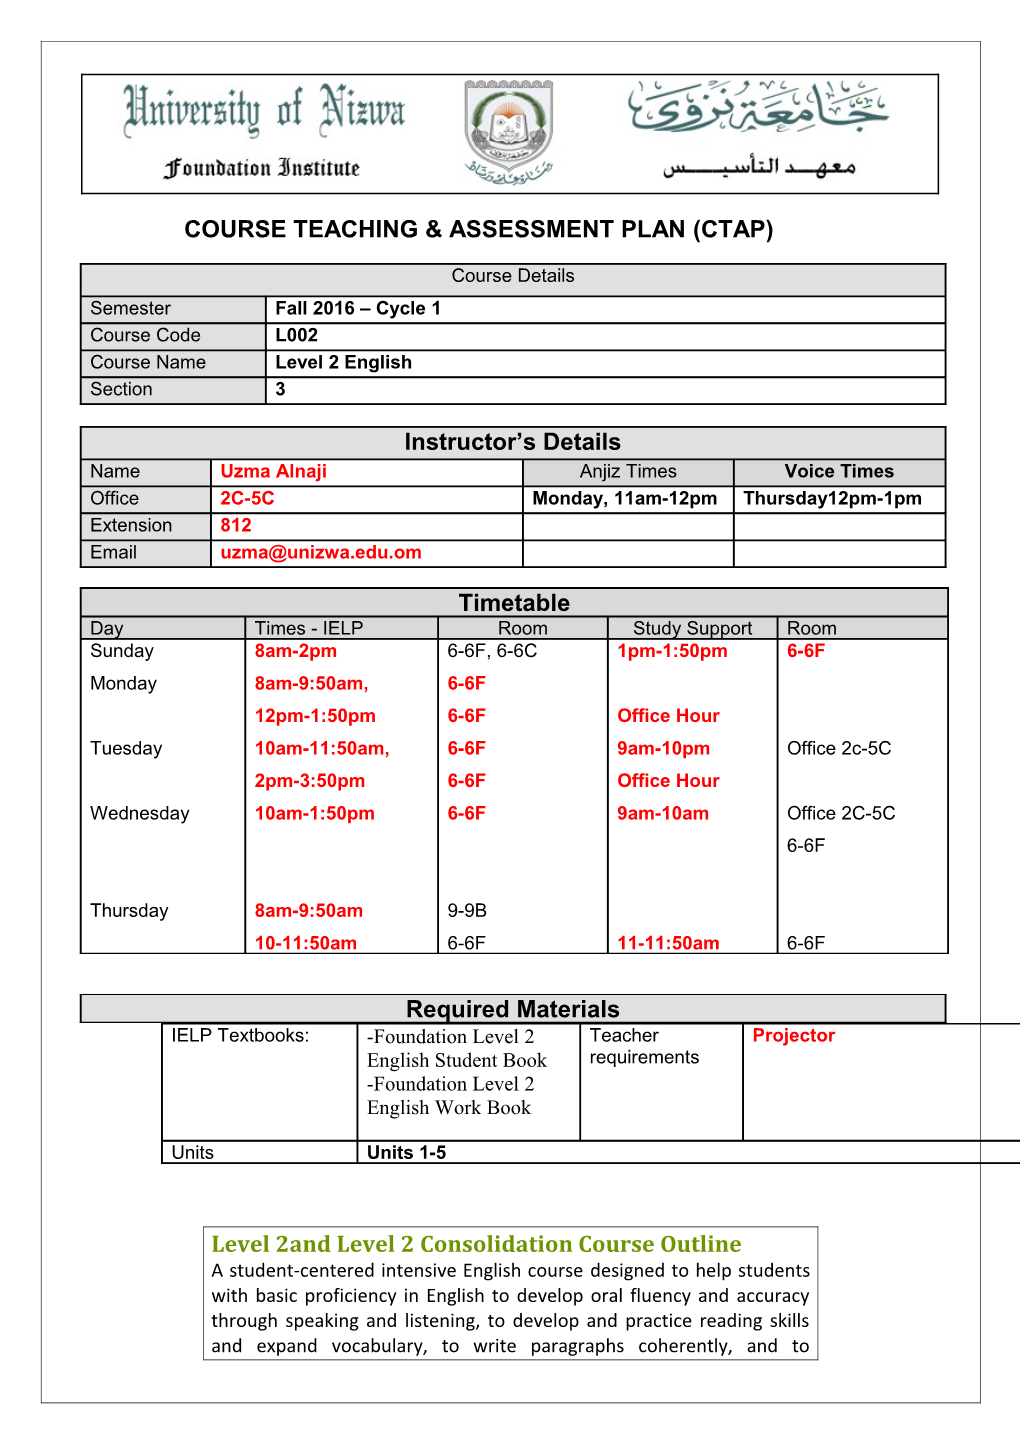 Course Teaching & Assessment Plan (Ctap)